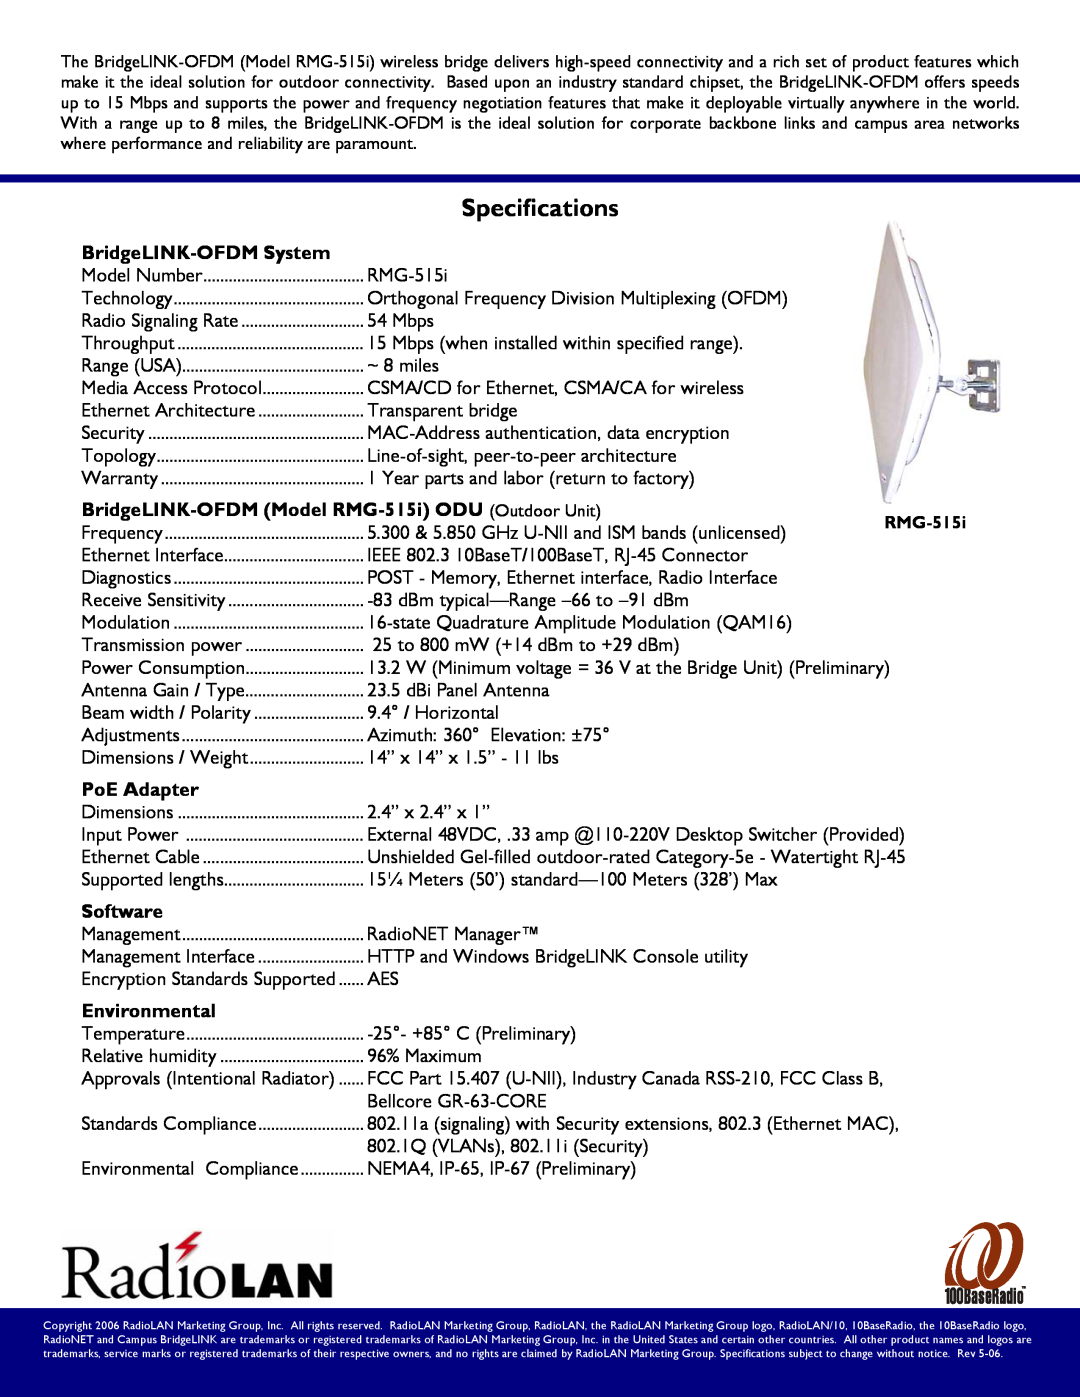 RadioLAN RMG-515I Specifications, BridgeLINK-OFDM System, BridgeLINK-OFDM Model RMG-515i ODU Outdoor Unit, PoE Adapter 